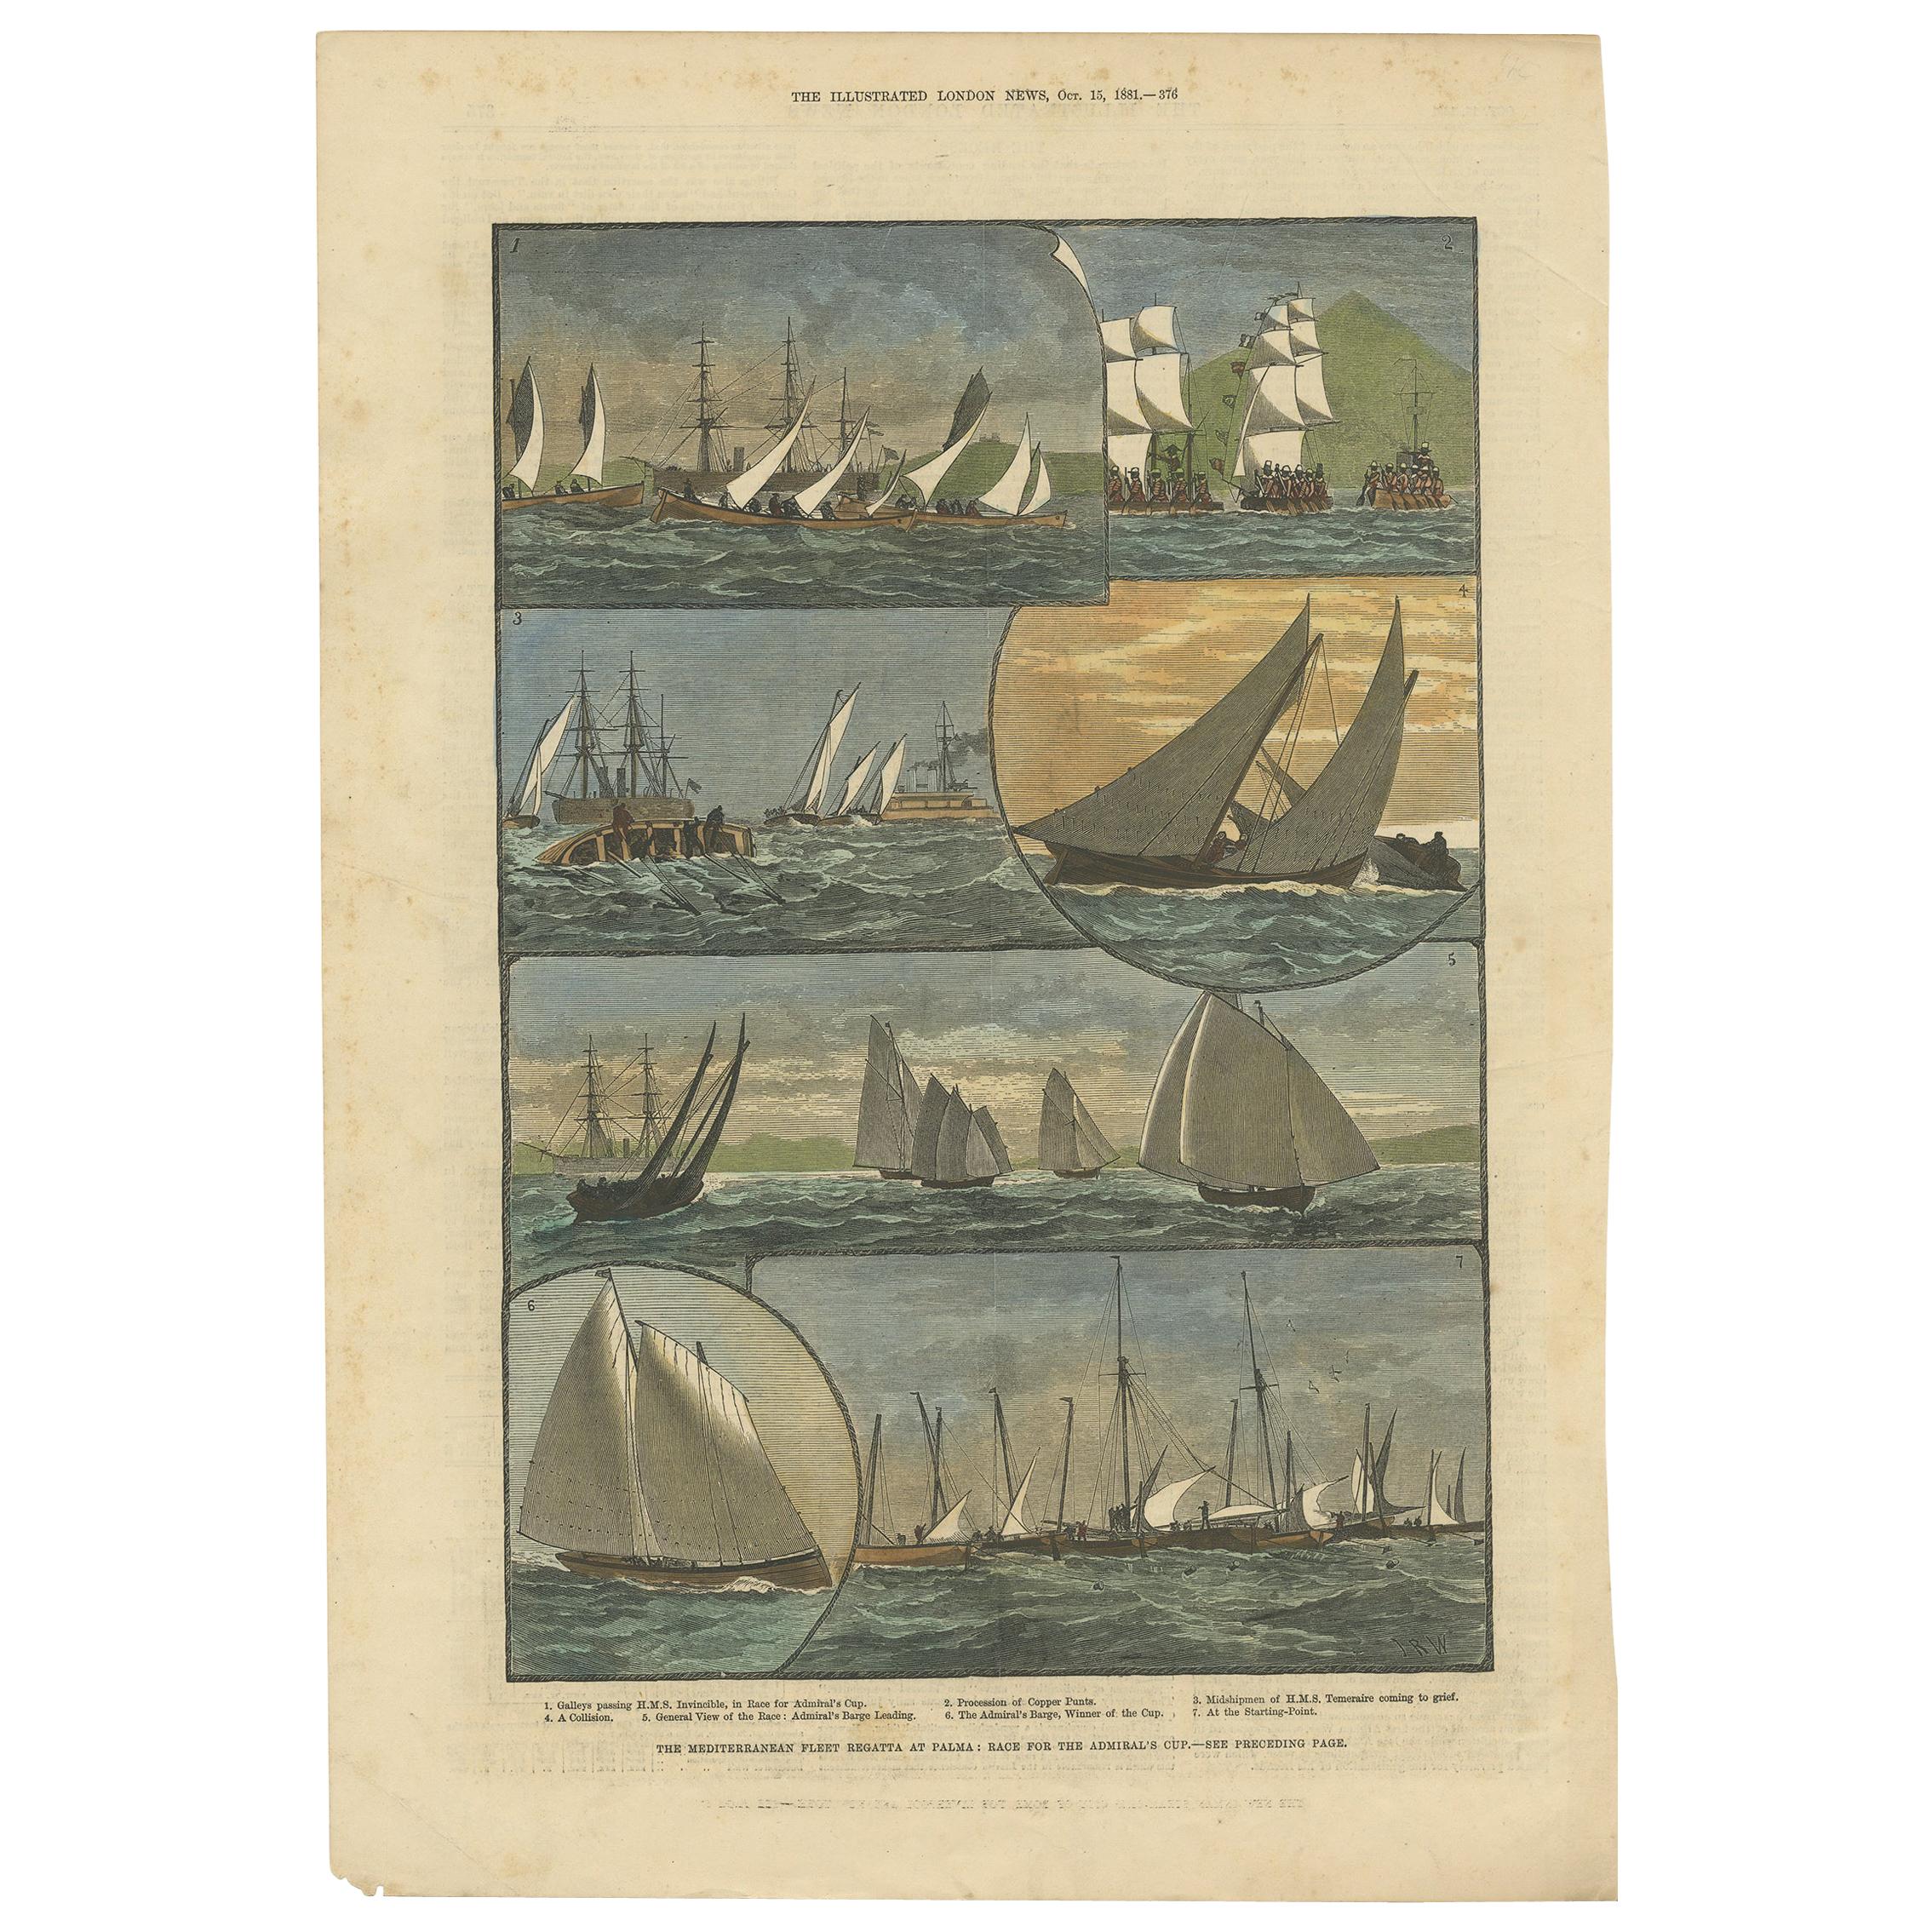 Antique Print of the Mediterranean Fleet Regatta at Palma, 1881, Colored For Sale